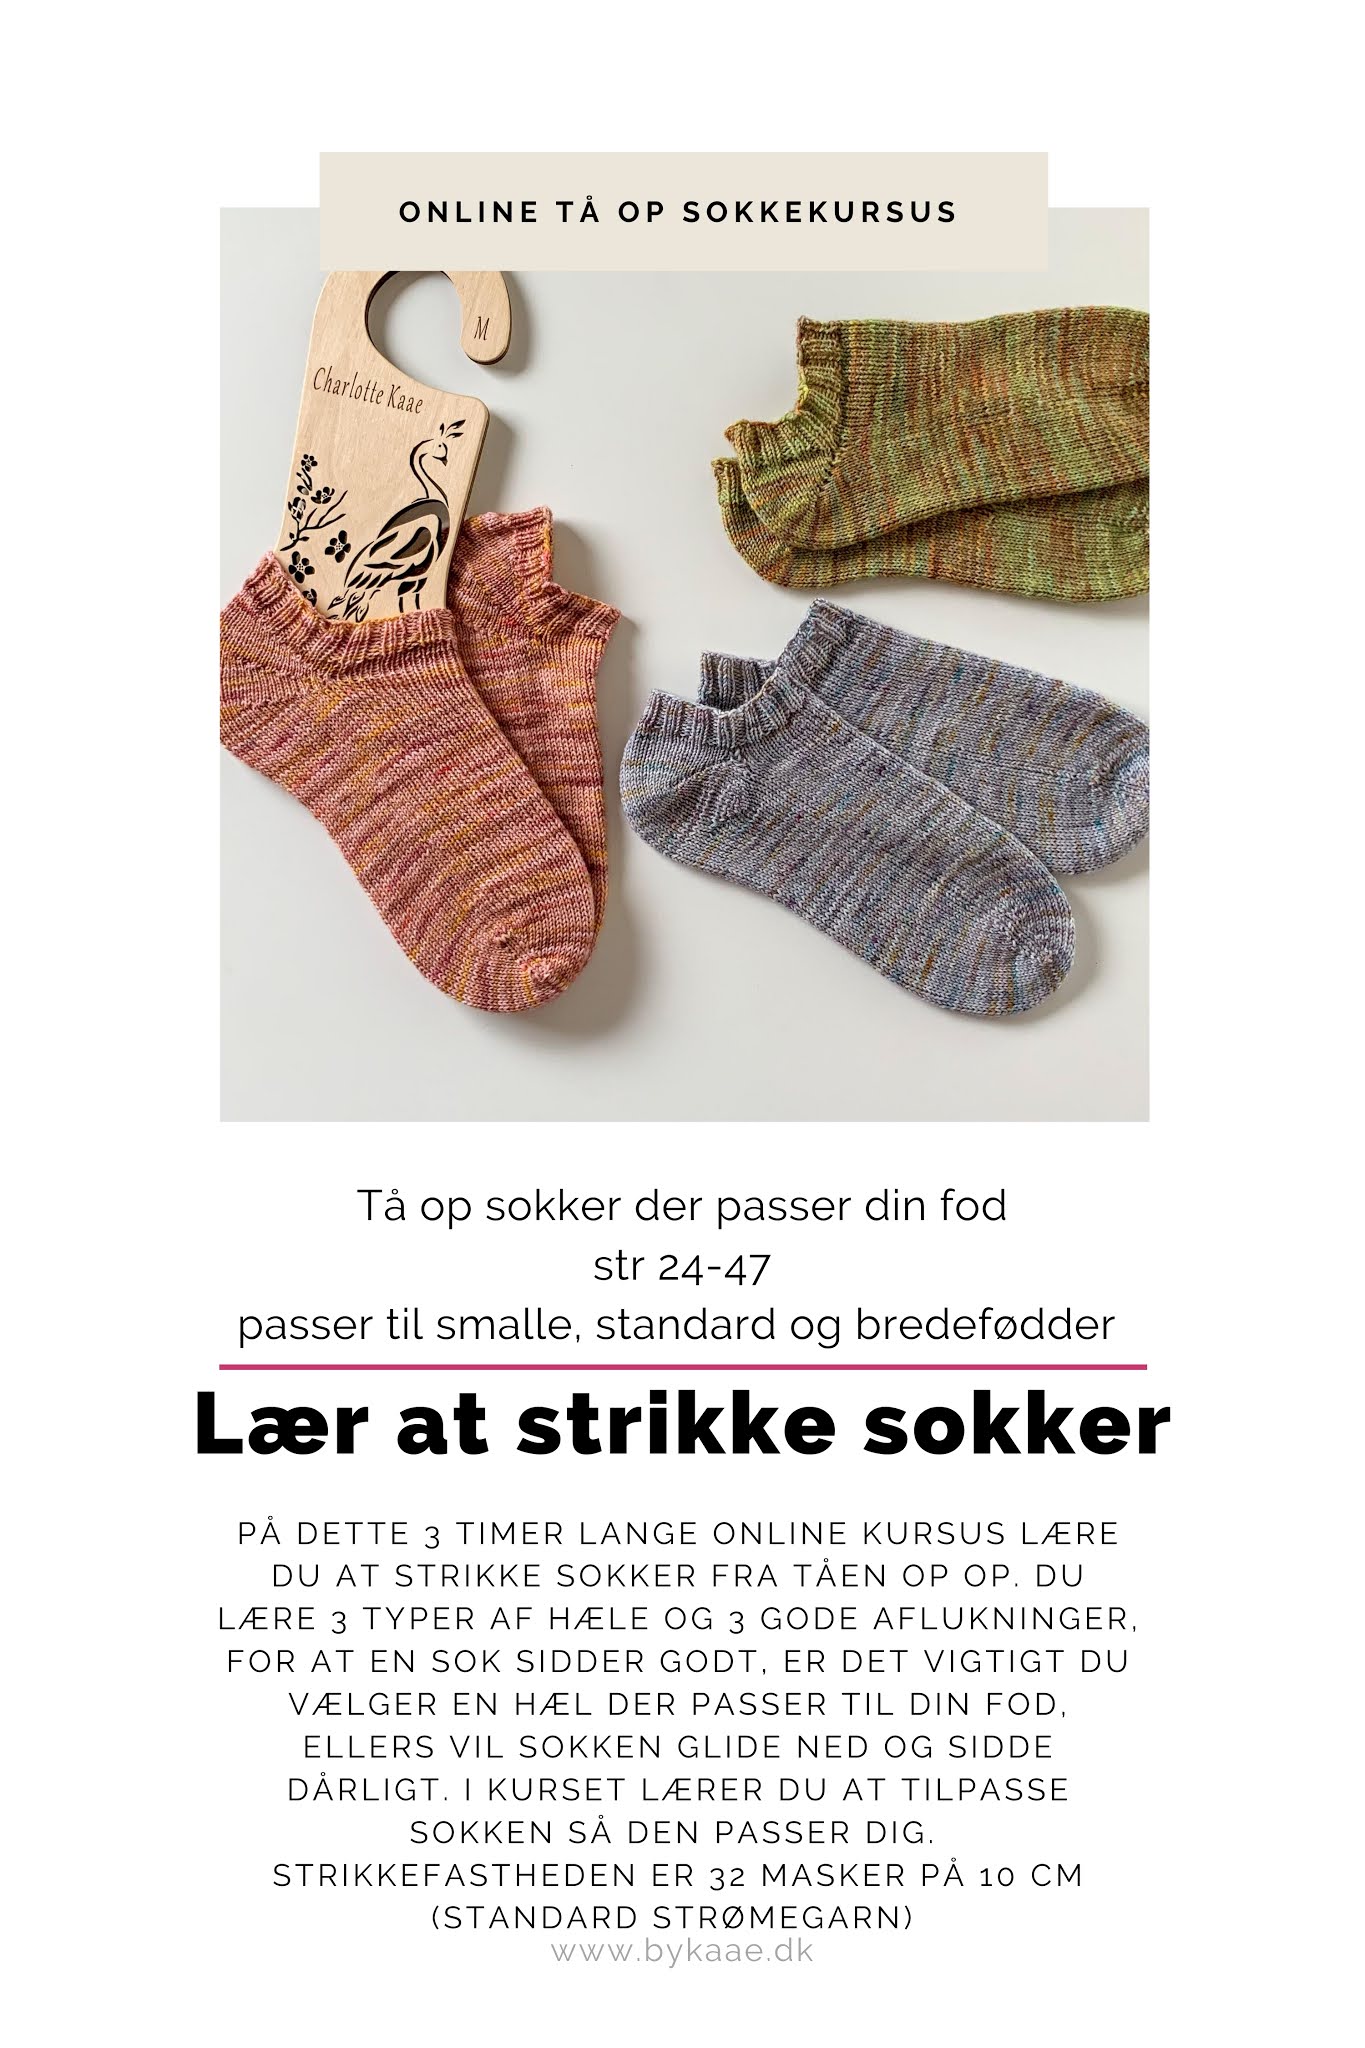 kommunista Mostanában Szicília at strikke sokker trin for paralizál